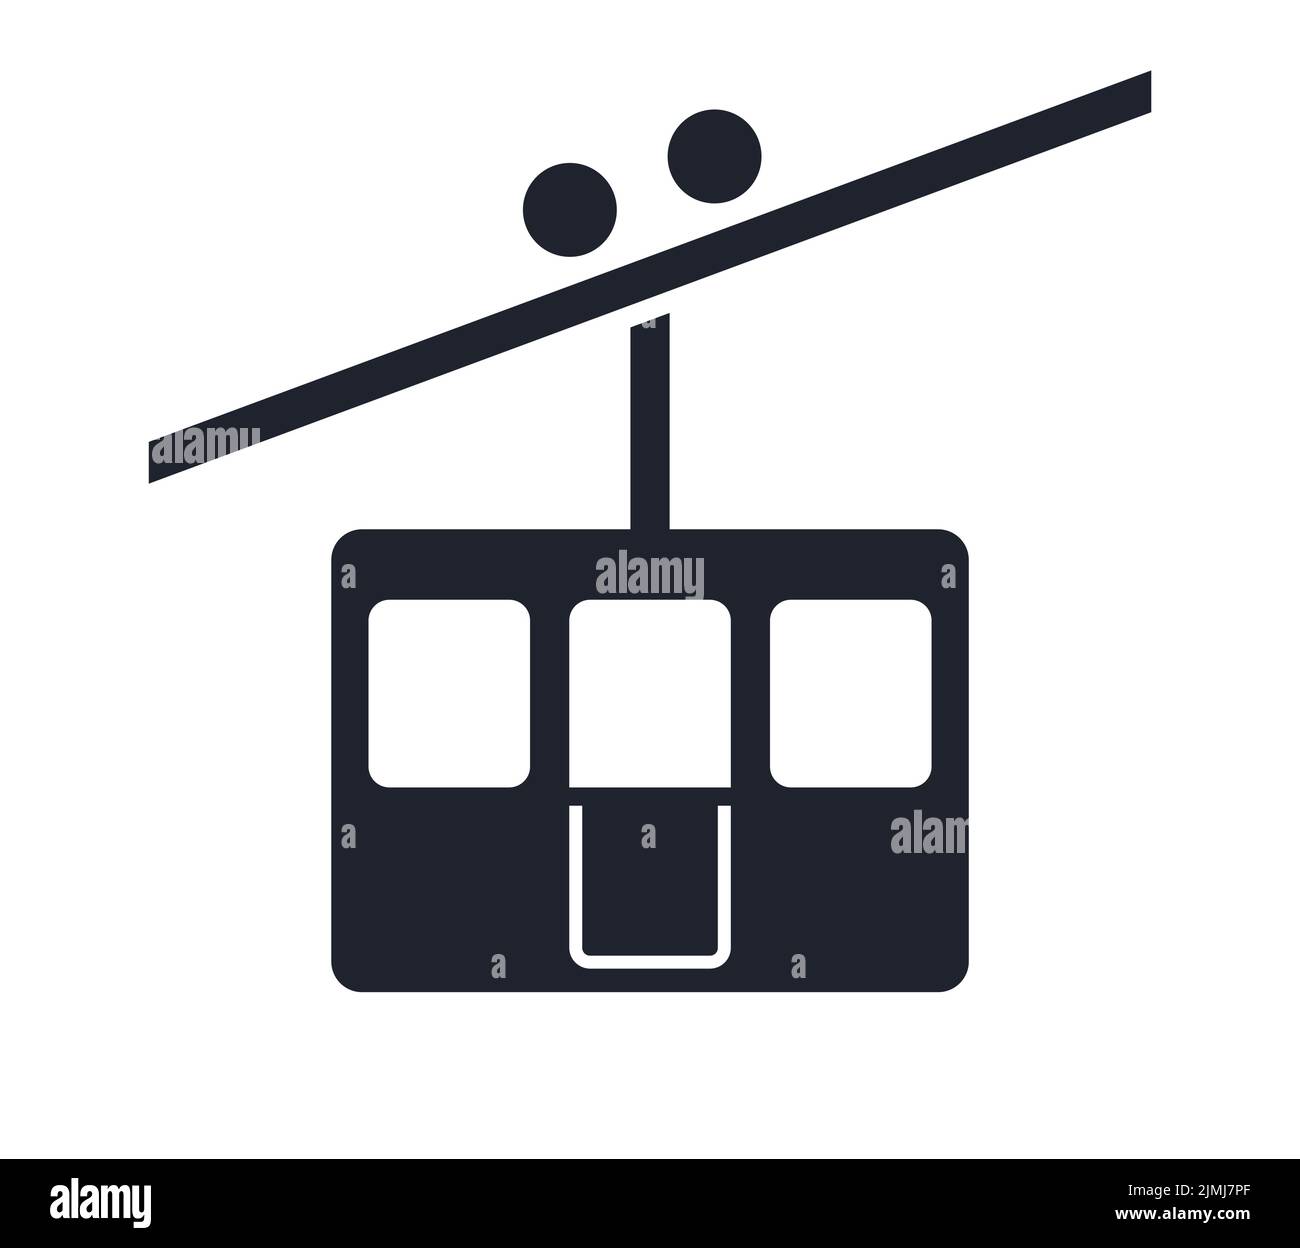 Cable car mountain lift gondola symbol vector illustration icon Stock Vector